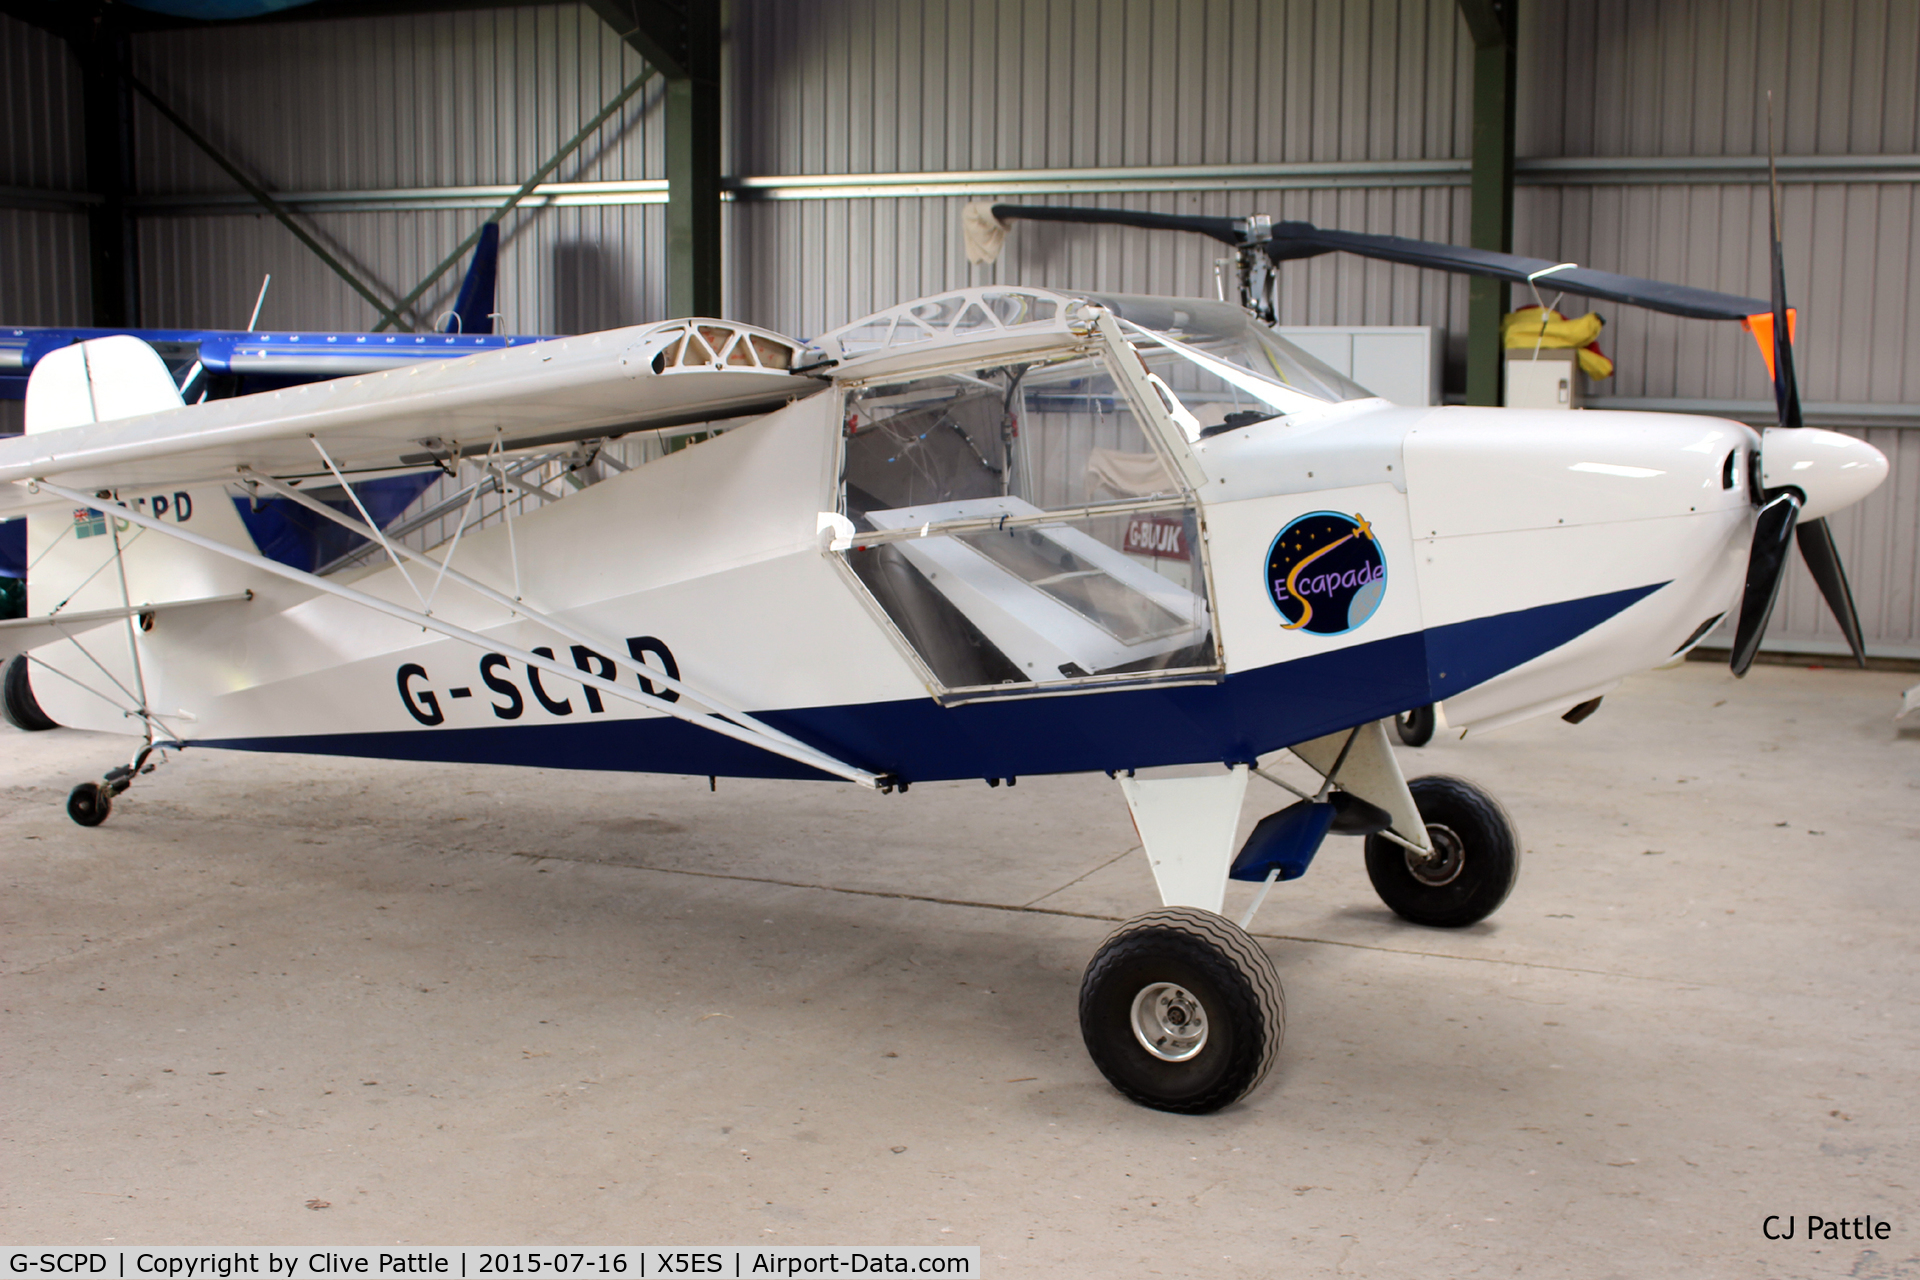 G-SCPD, 2004 Reality Escapade 912(1) C/N BMAA/HB/319, Hangared at Eshott Airfield EG34, Northumberland, UK.